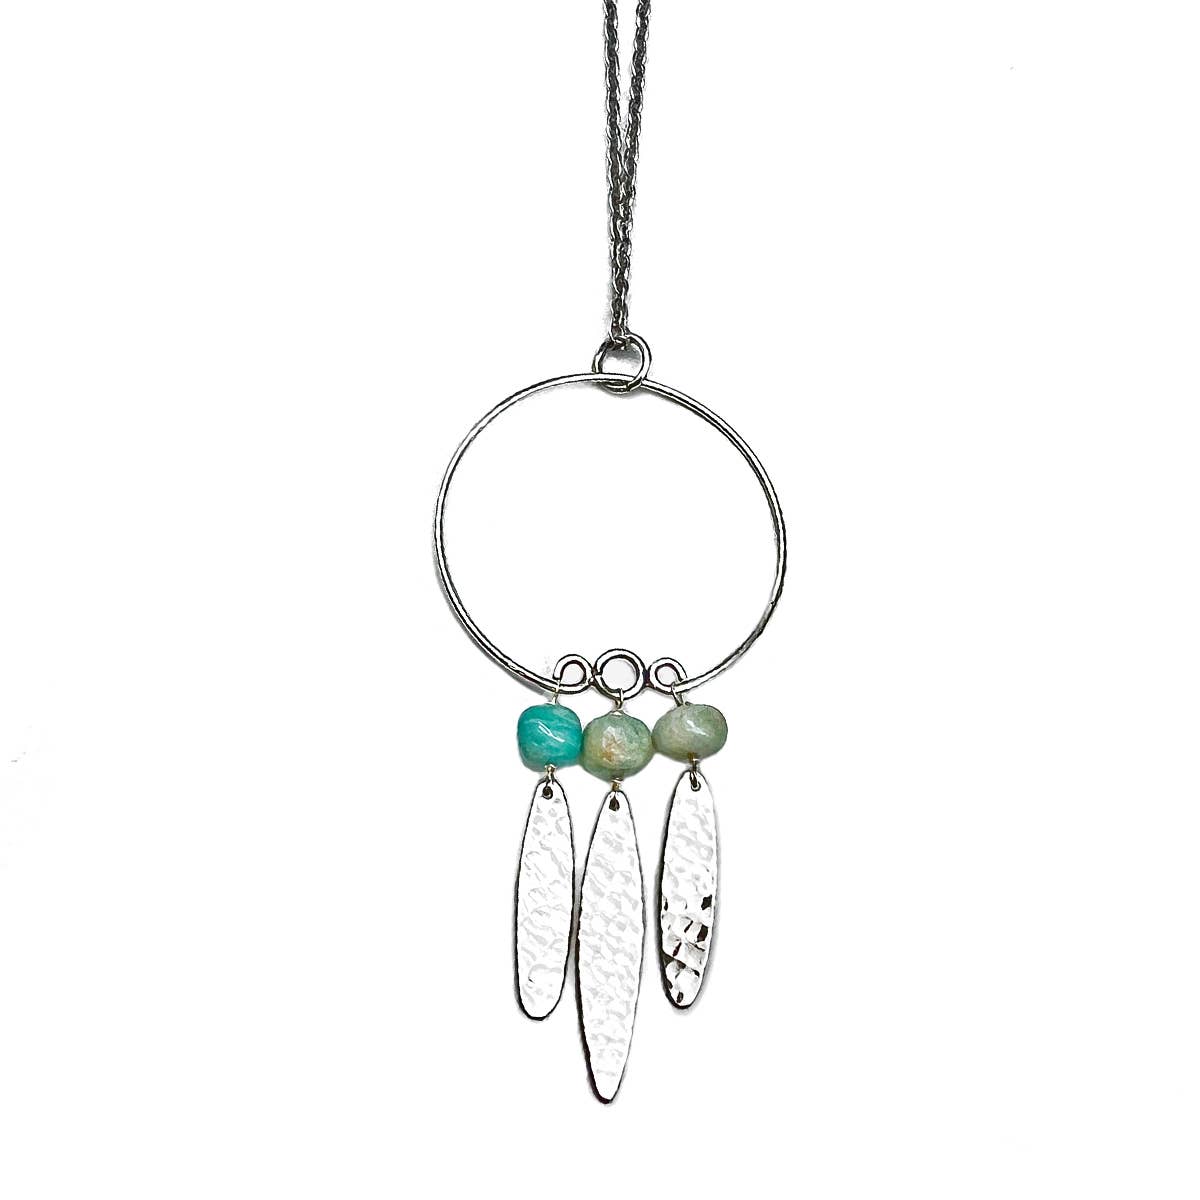 Banjara Necklace - Hammered Silver and Amazonite Beads